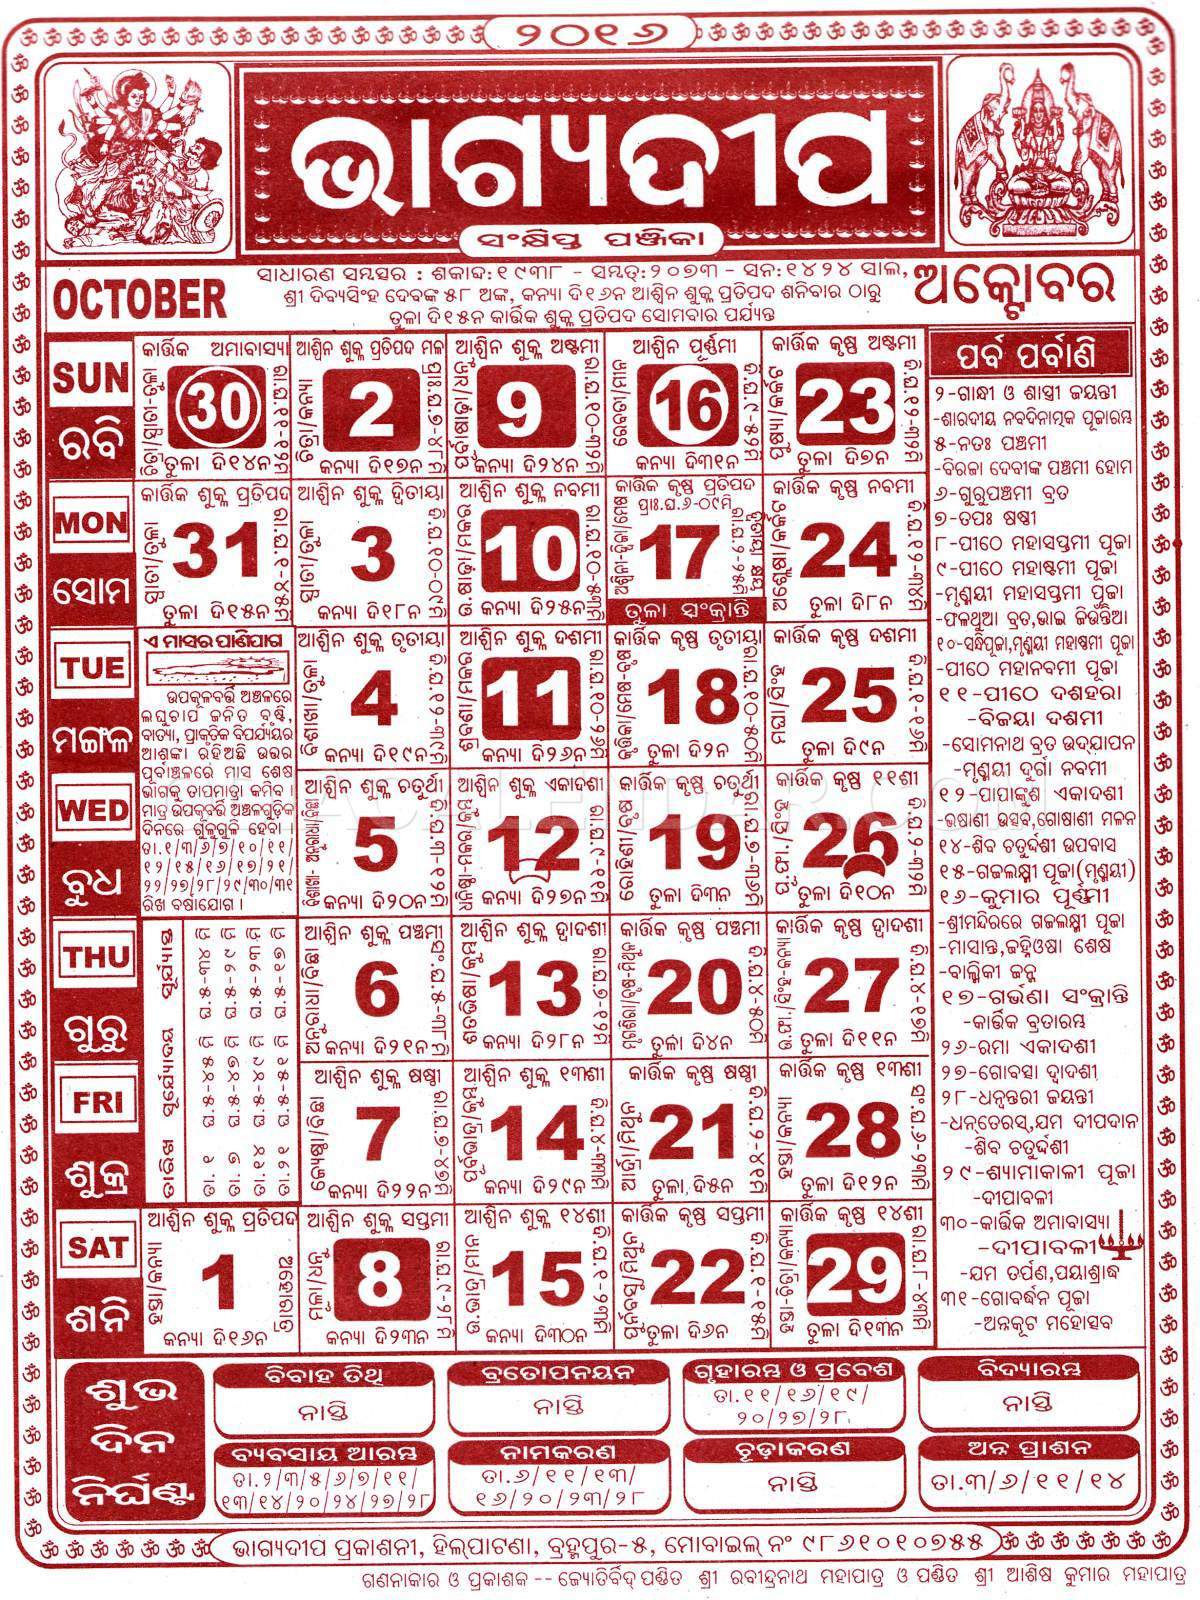 Bhagyadeep October 2016 Image